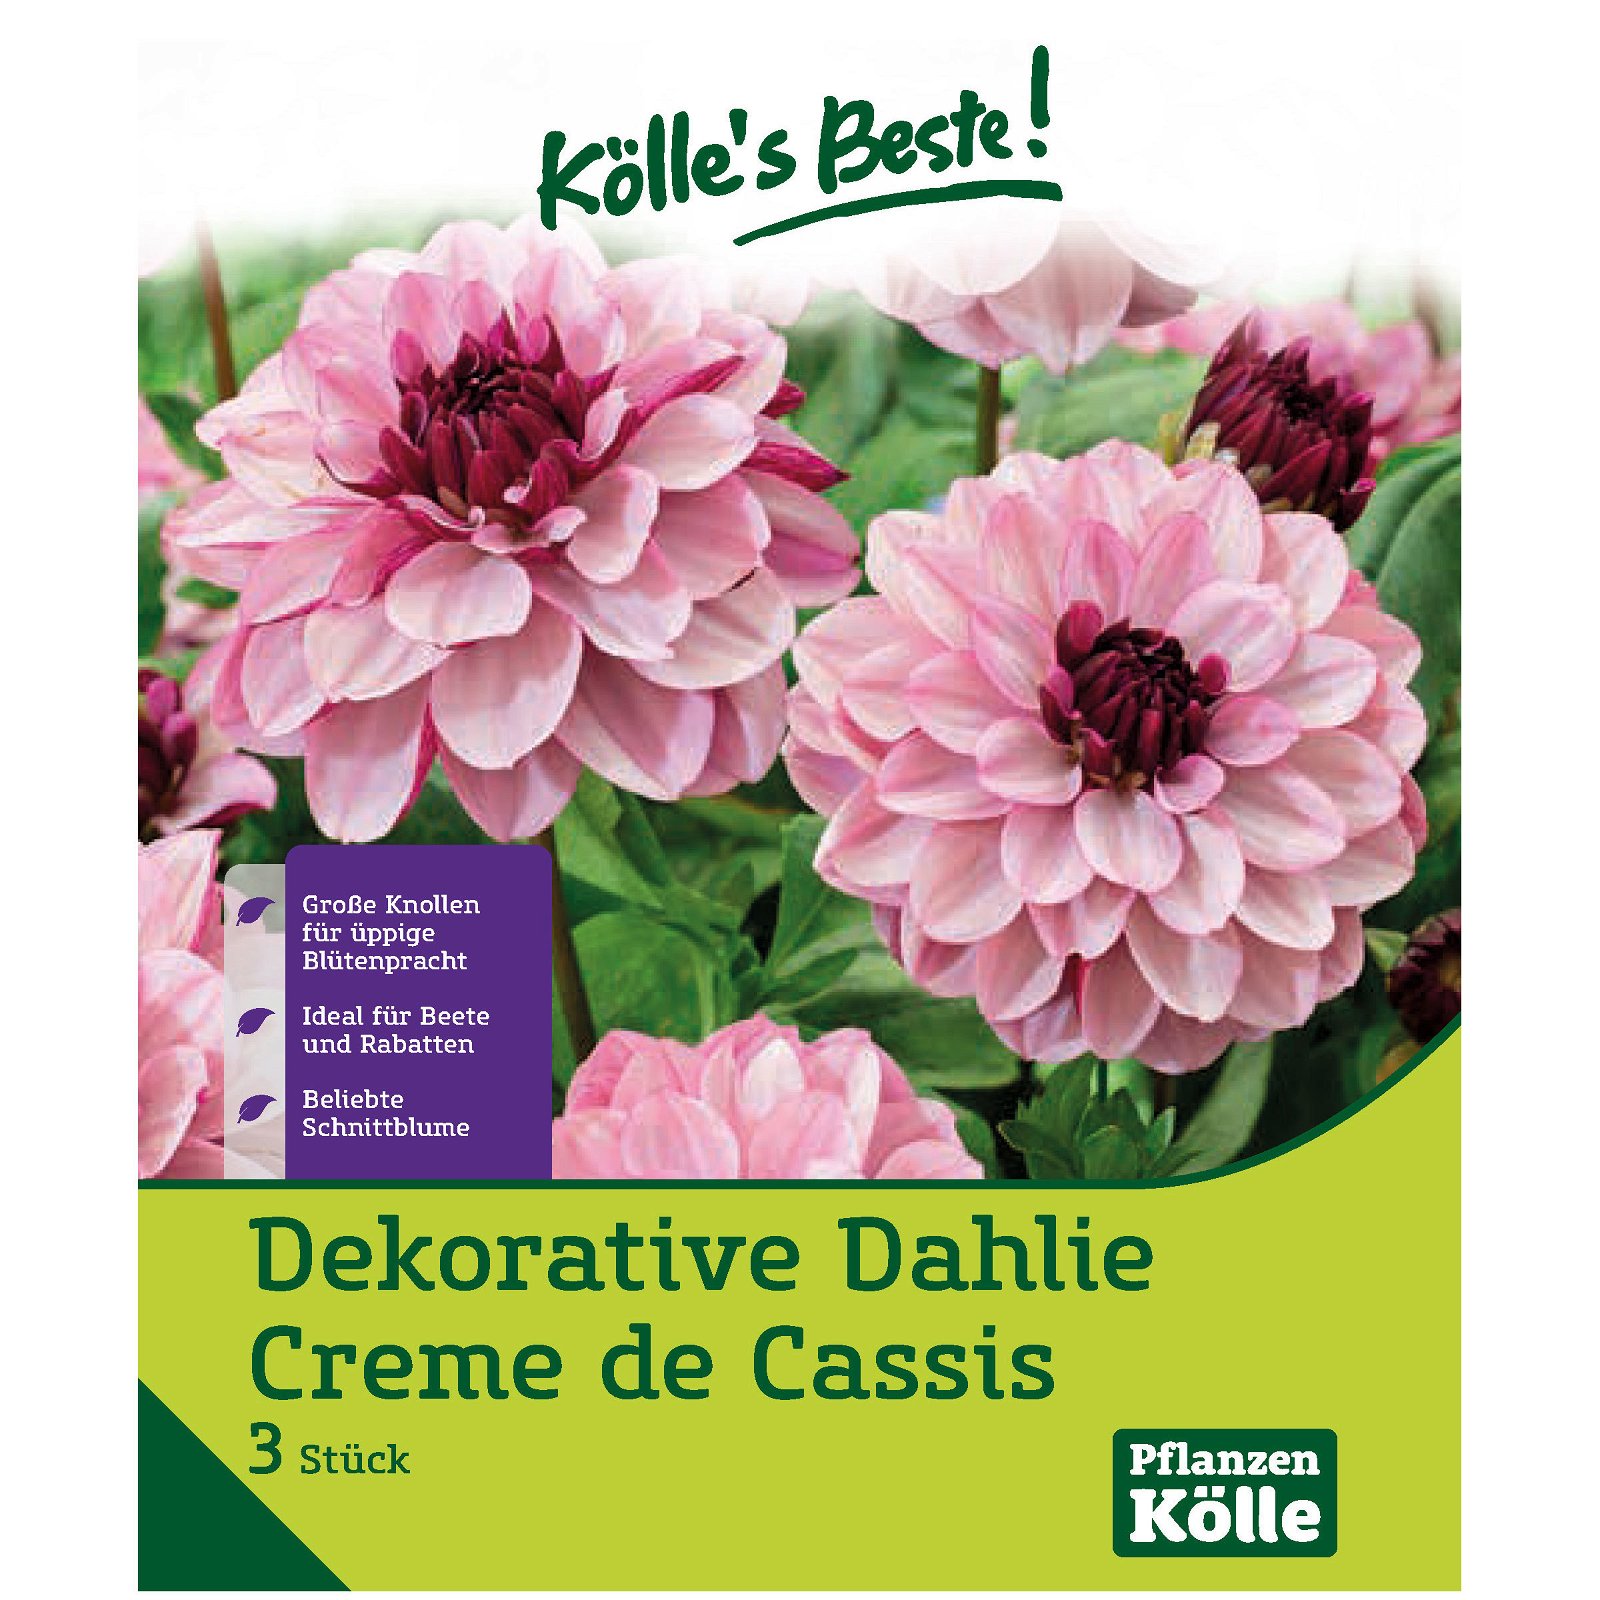 Dekorative Dahlie Creme de Cassis, lila, Größe 1, 3 Blumenknollen